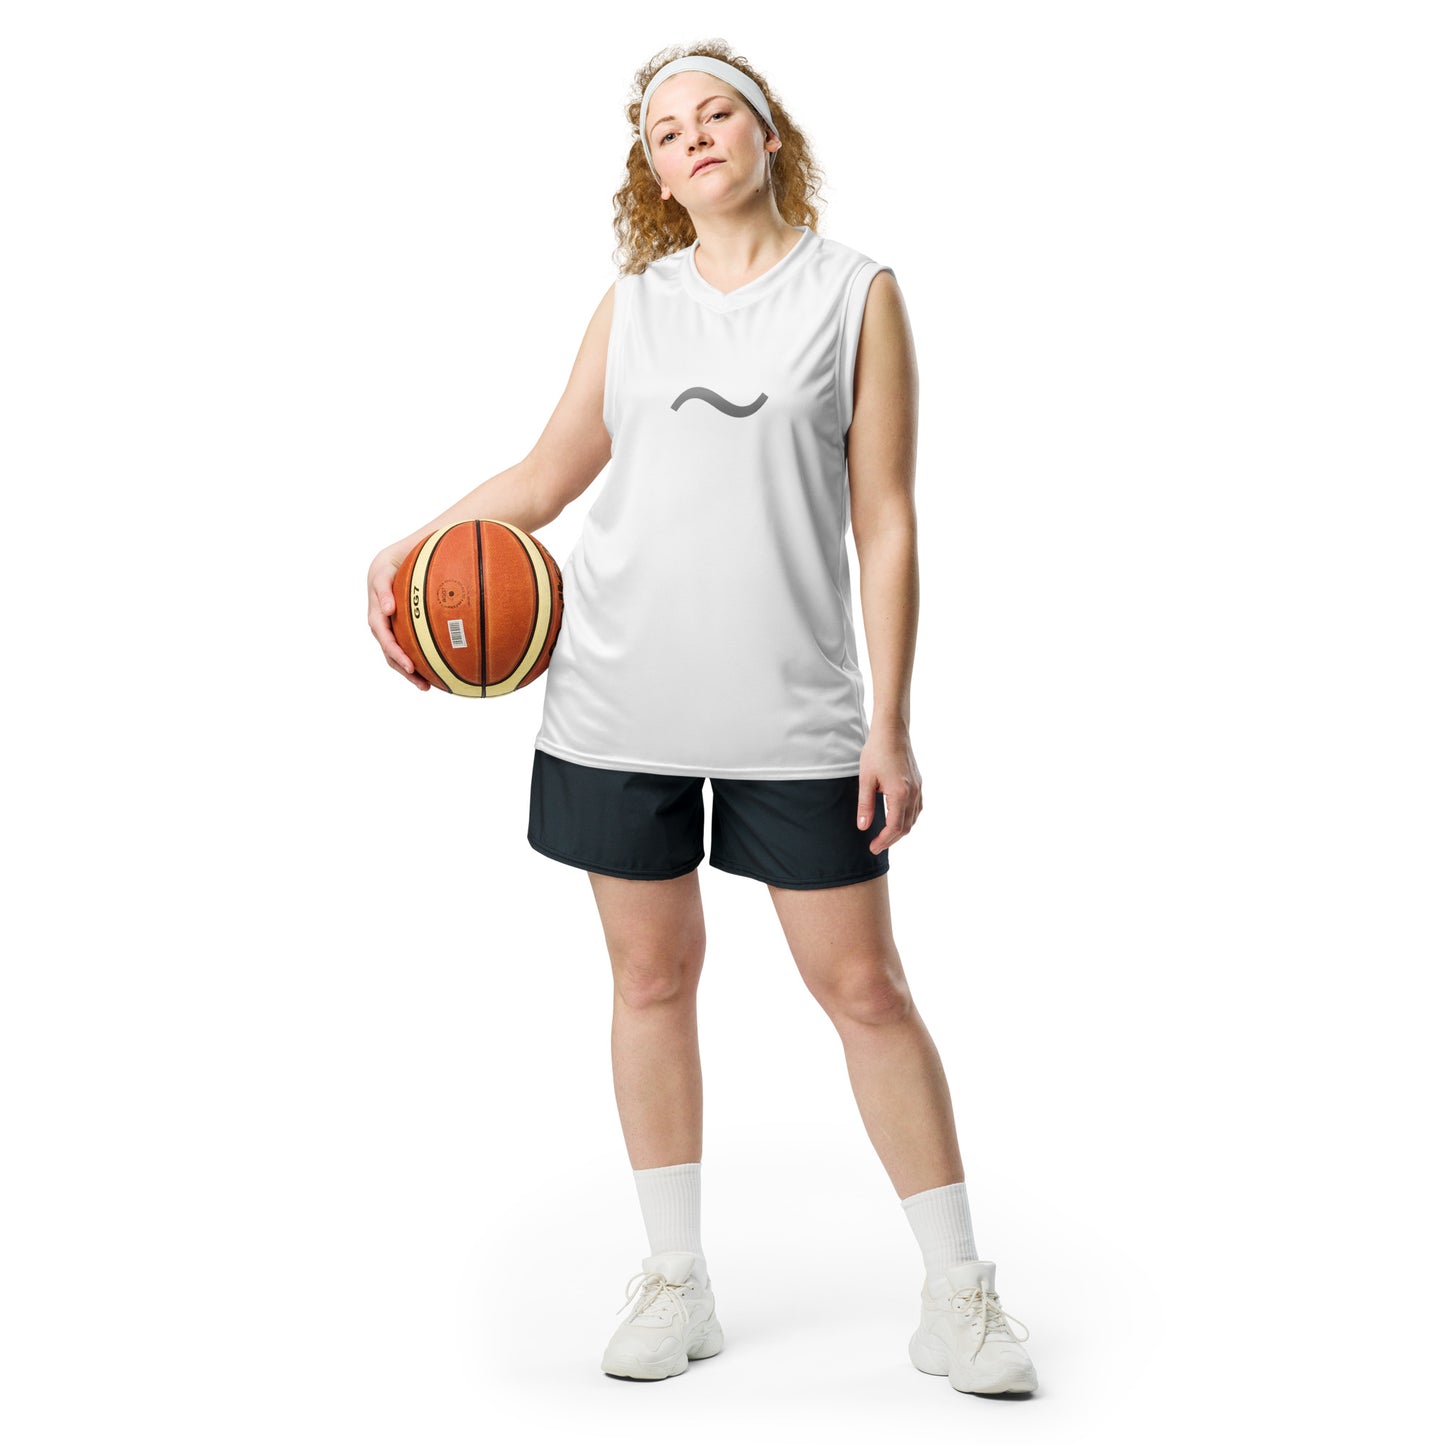 "CALLA EDGE" Performance Sustainable unisex basketball jersey